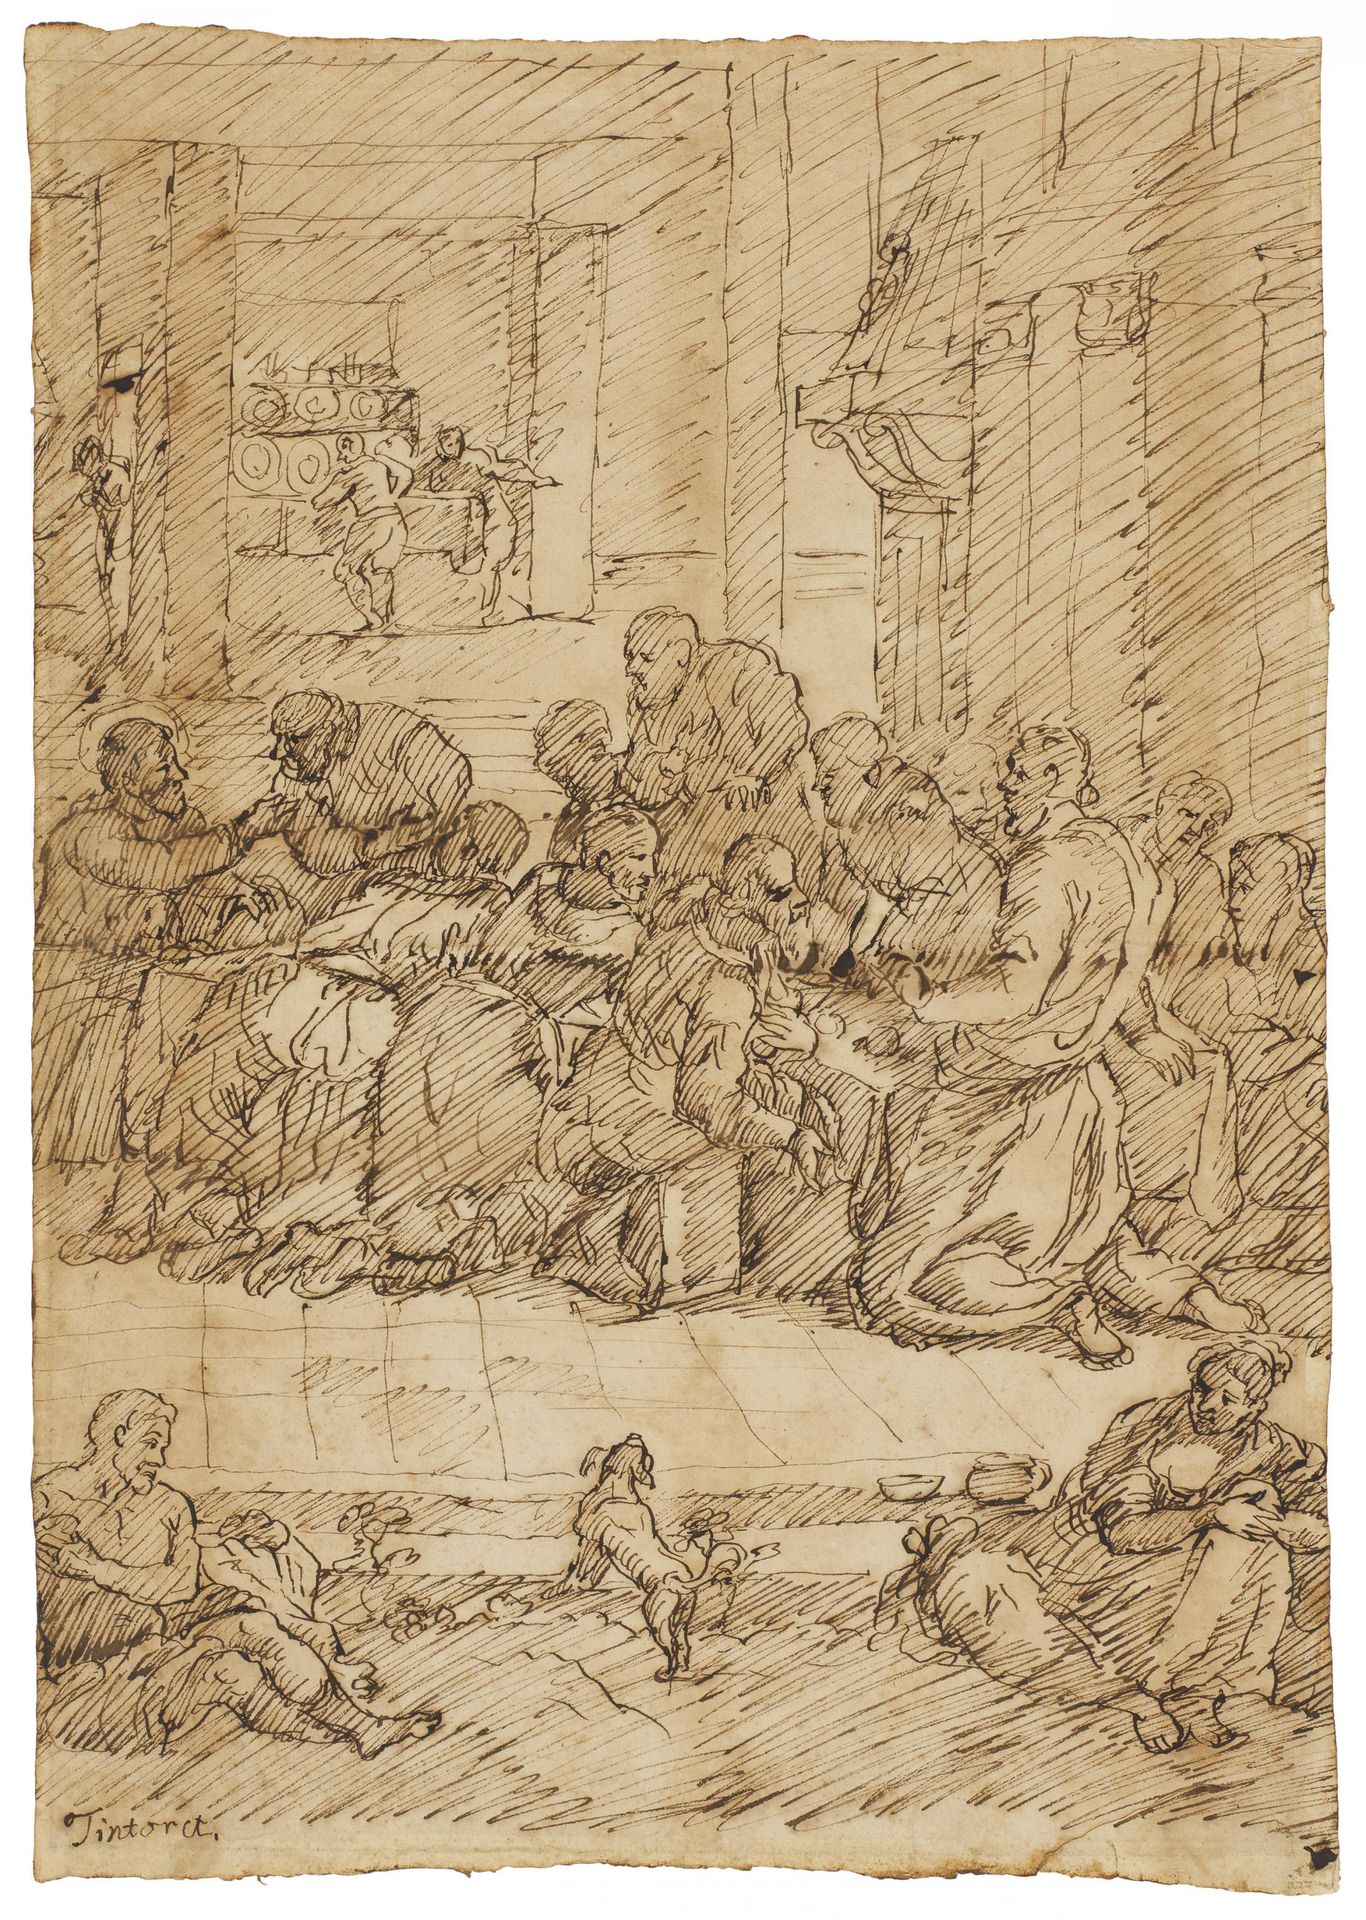 ITALIENISCHE SCHULE 意大利学校
17世纪。
标题： 最后的晚餐。
技术： 纸上墨水笔。
尺寸： 43 x 30厘米。
题目： 左下角刻有字。&hellip;